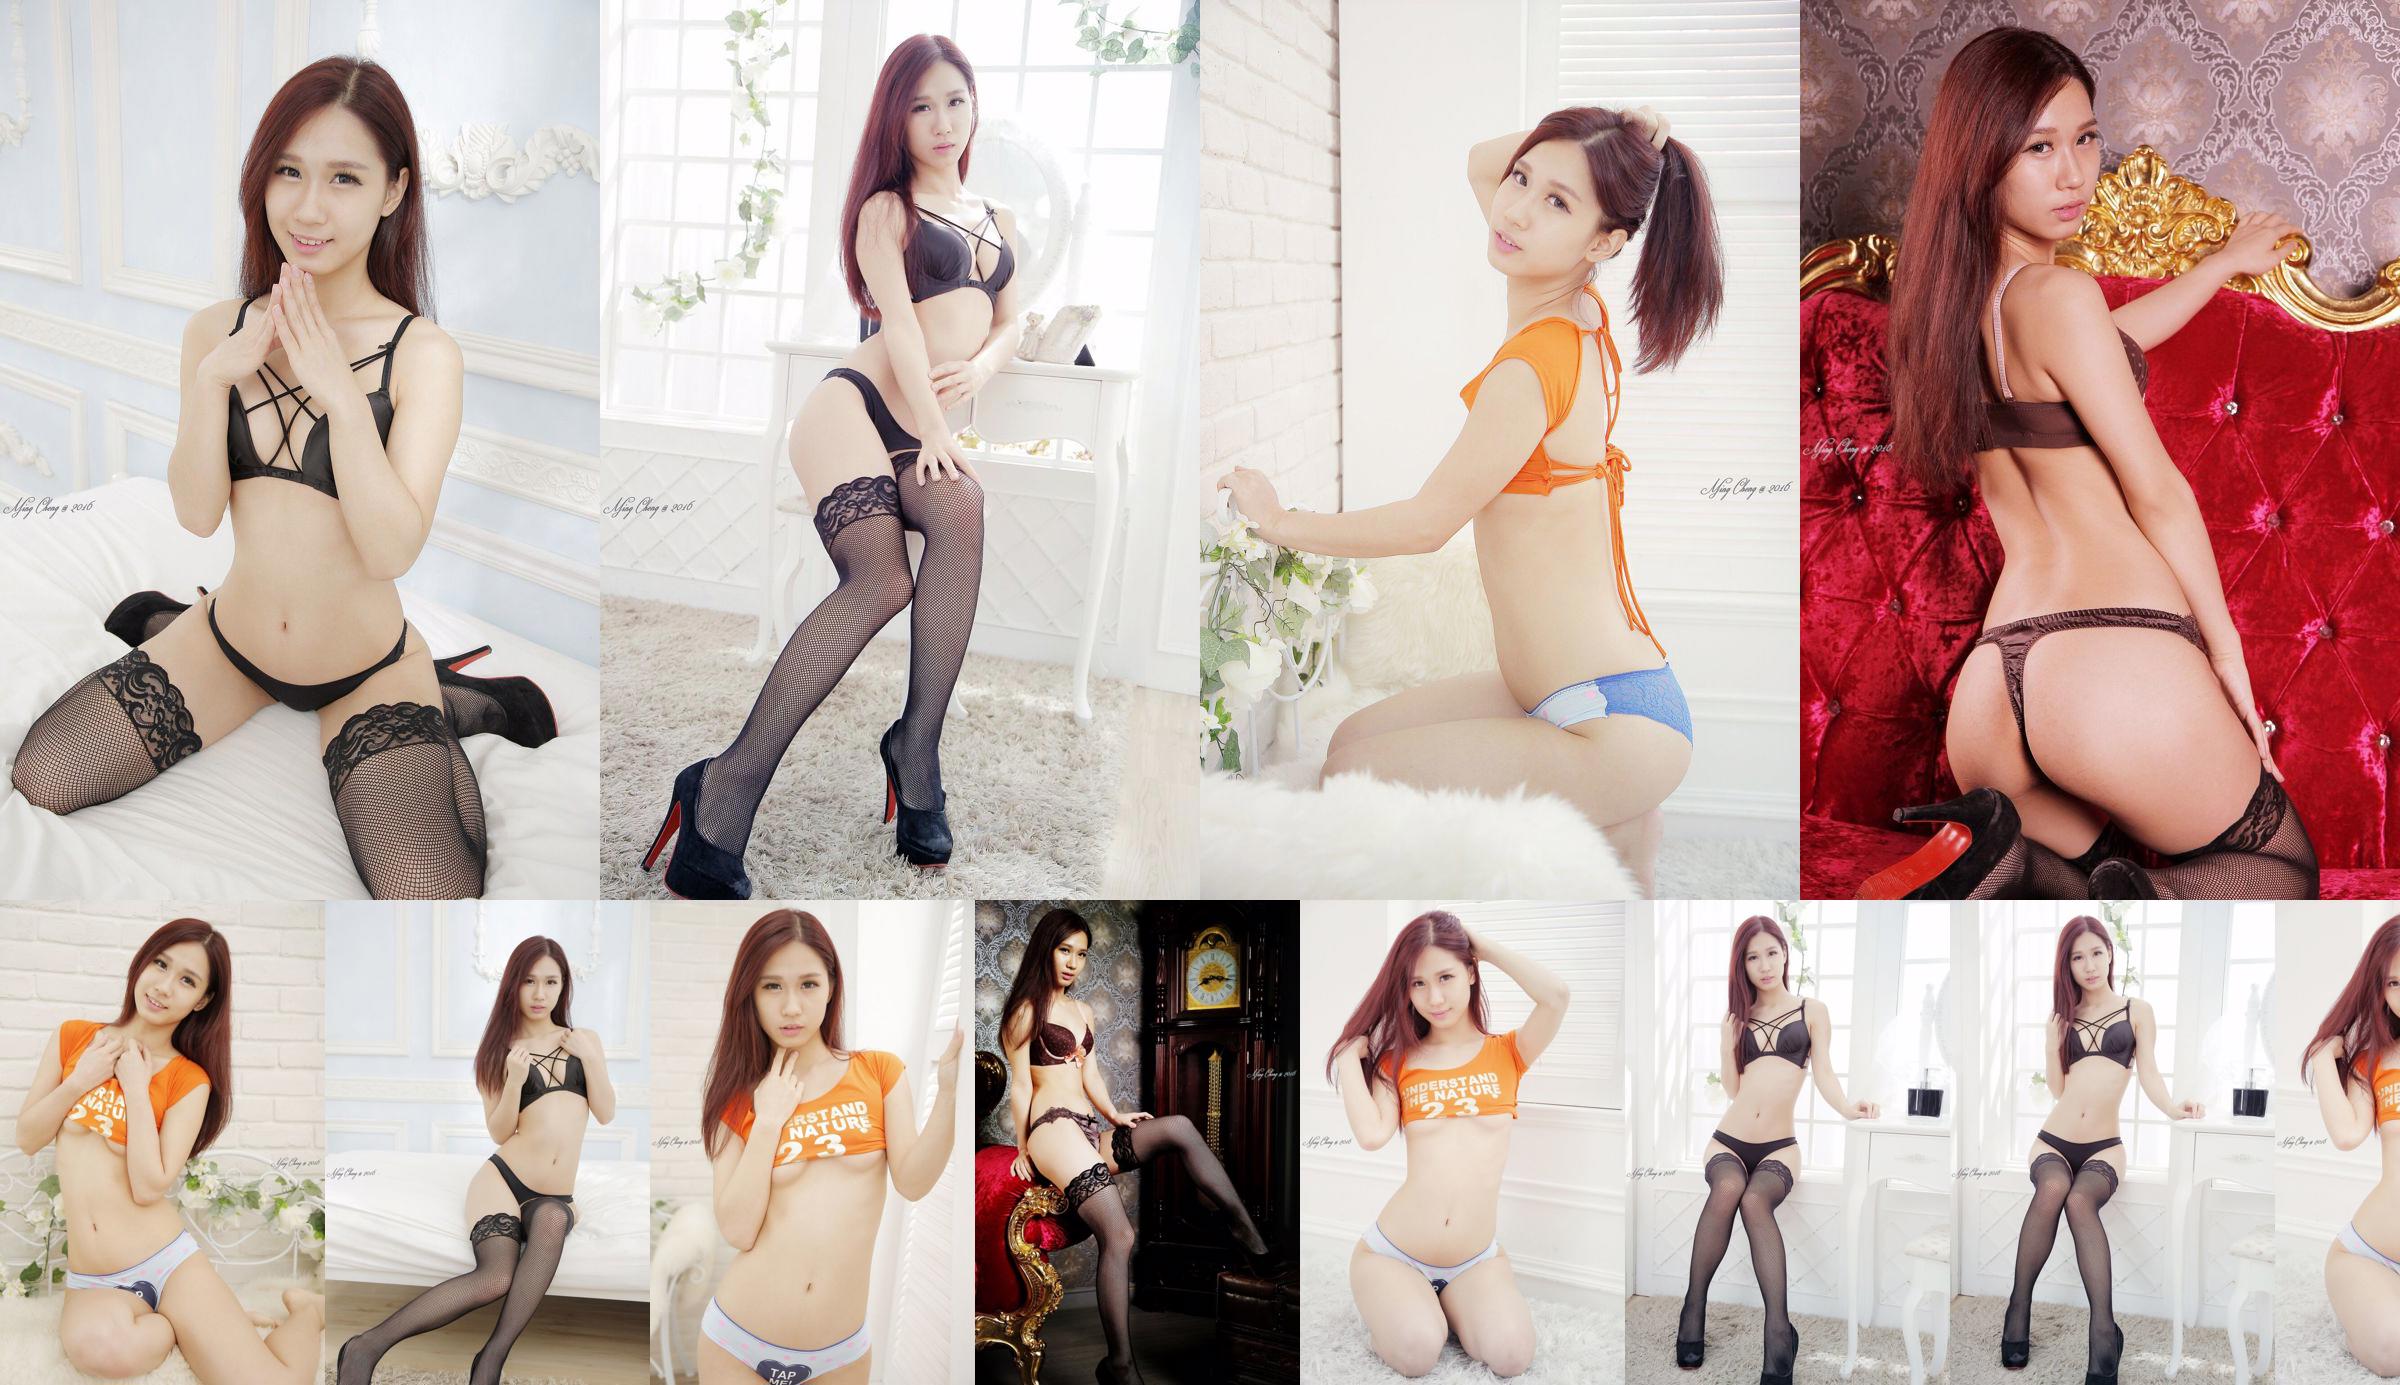 [Taiwan Zhengmei] Belle underwear studio shooting No.a9c1fc Page 1